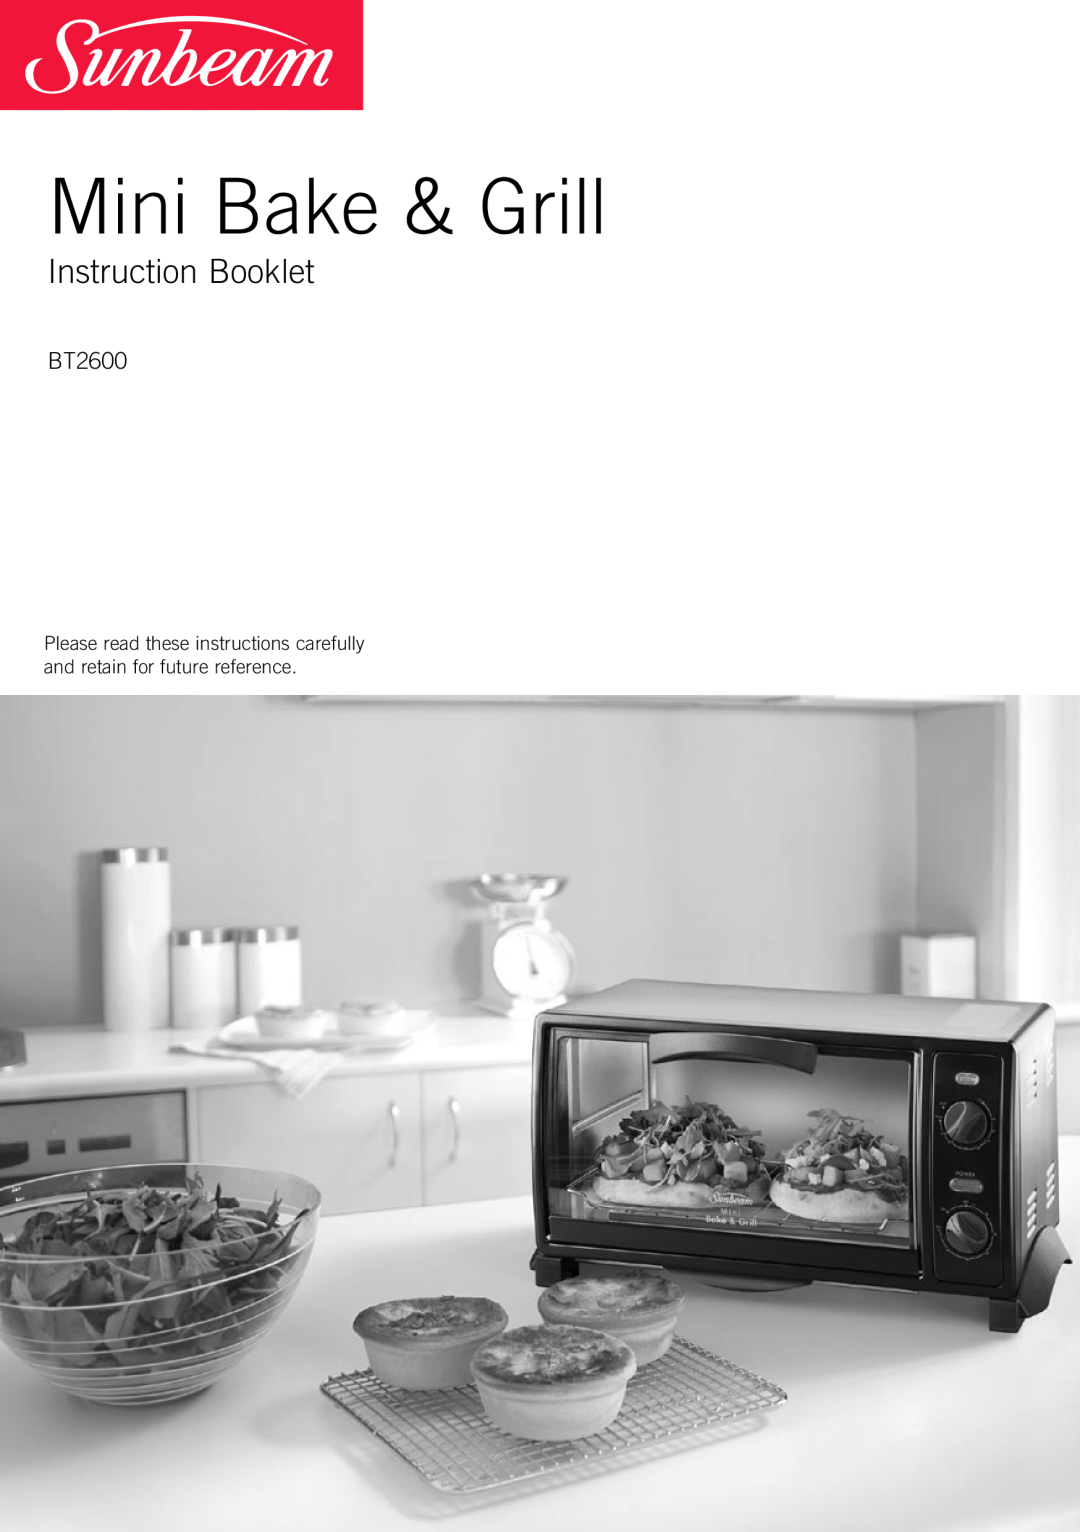 Sunbeam BT2600 manual Mini Bake & Grill, Instruction Booklet 